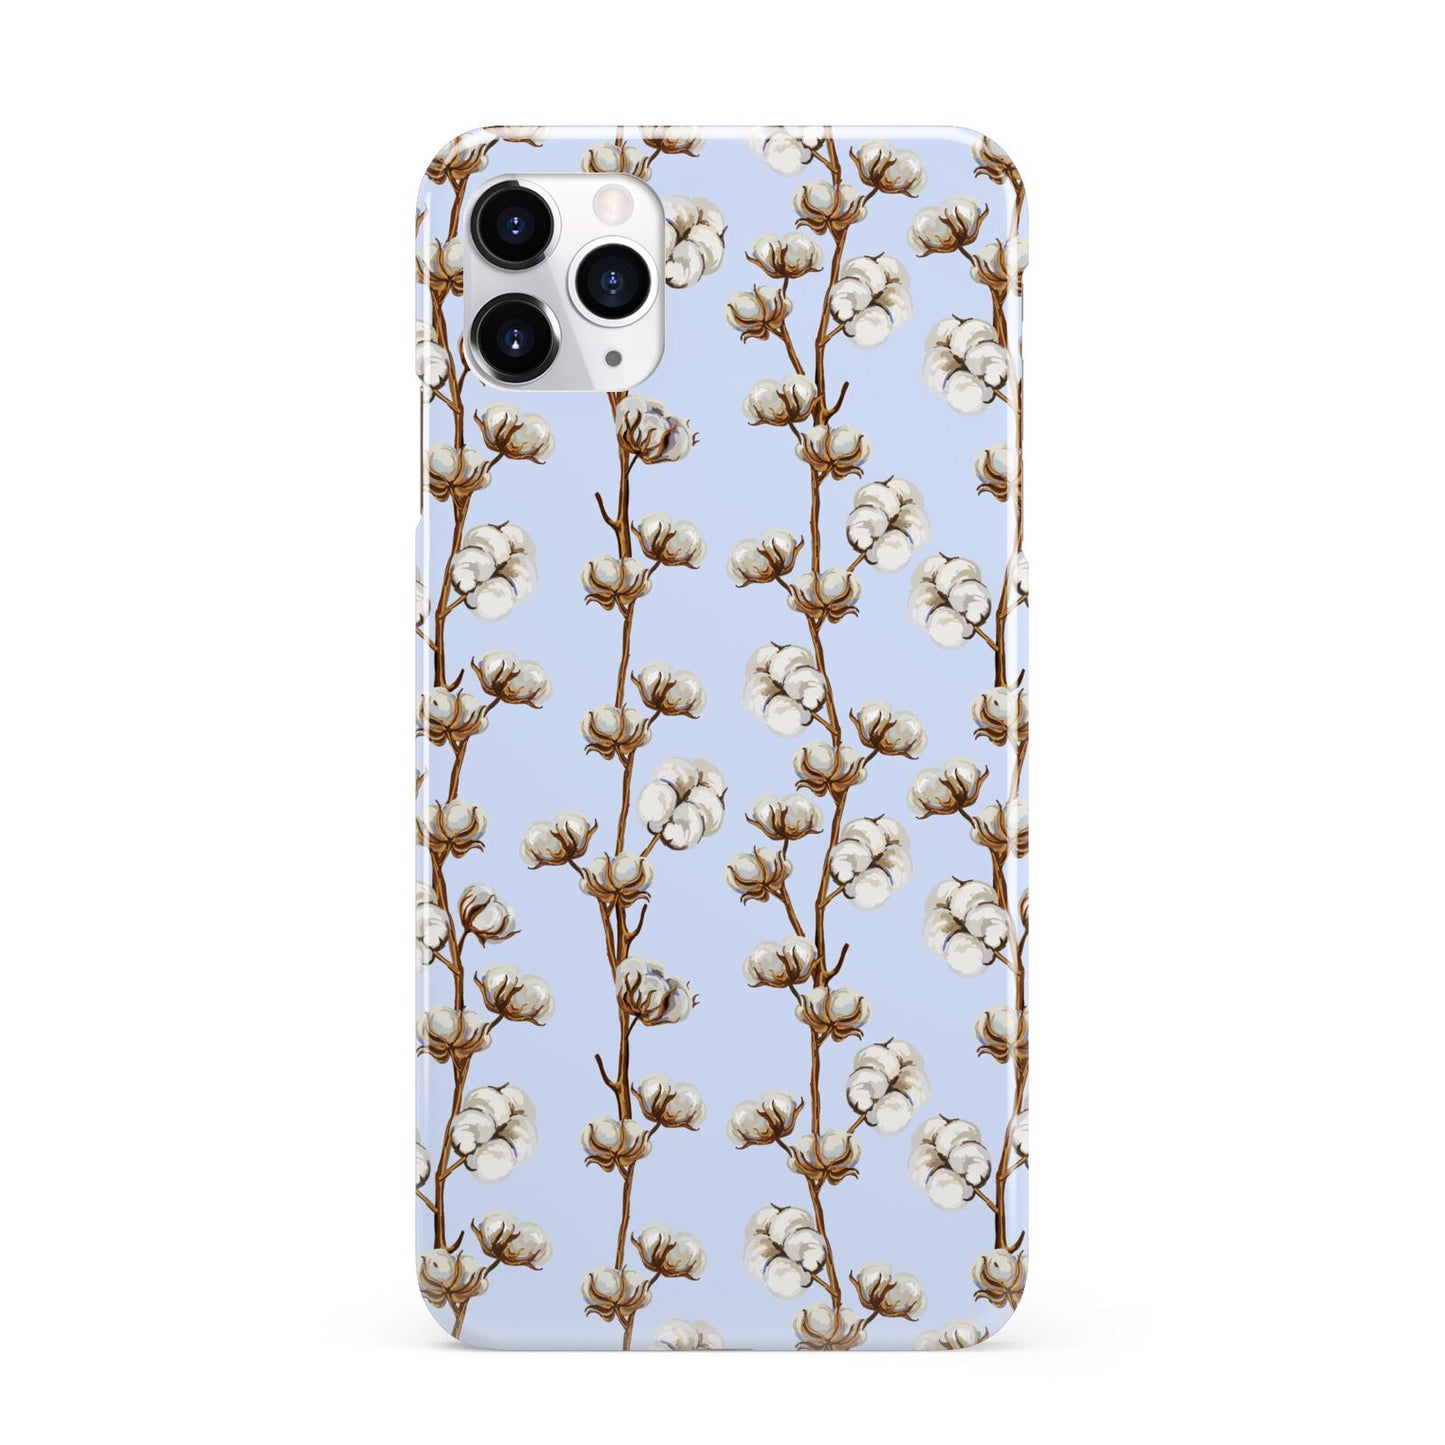 Cotton Branch iPhone 11 Pro Max 3D Snap Case